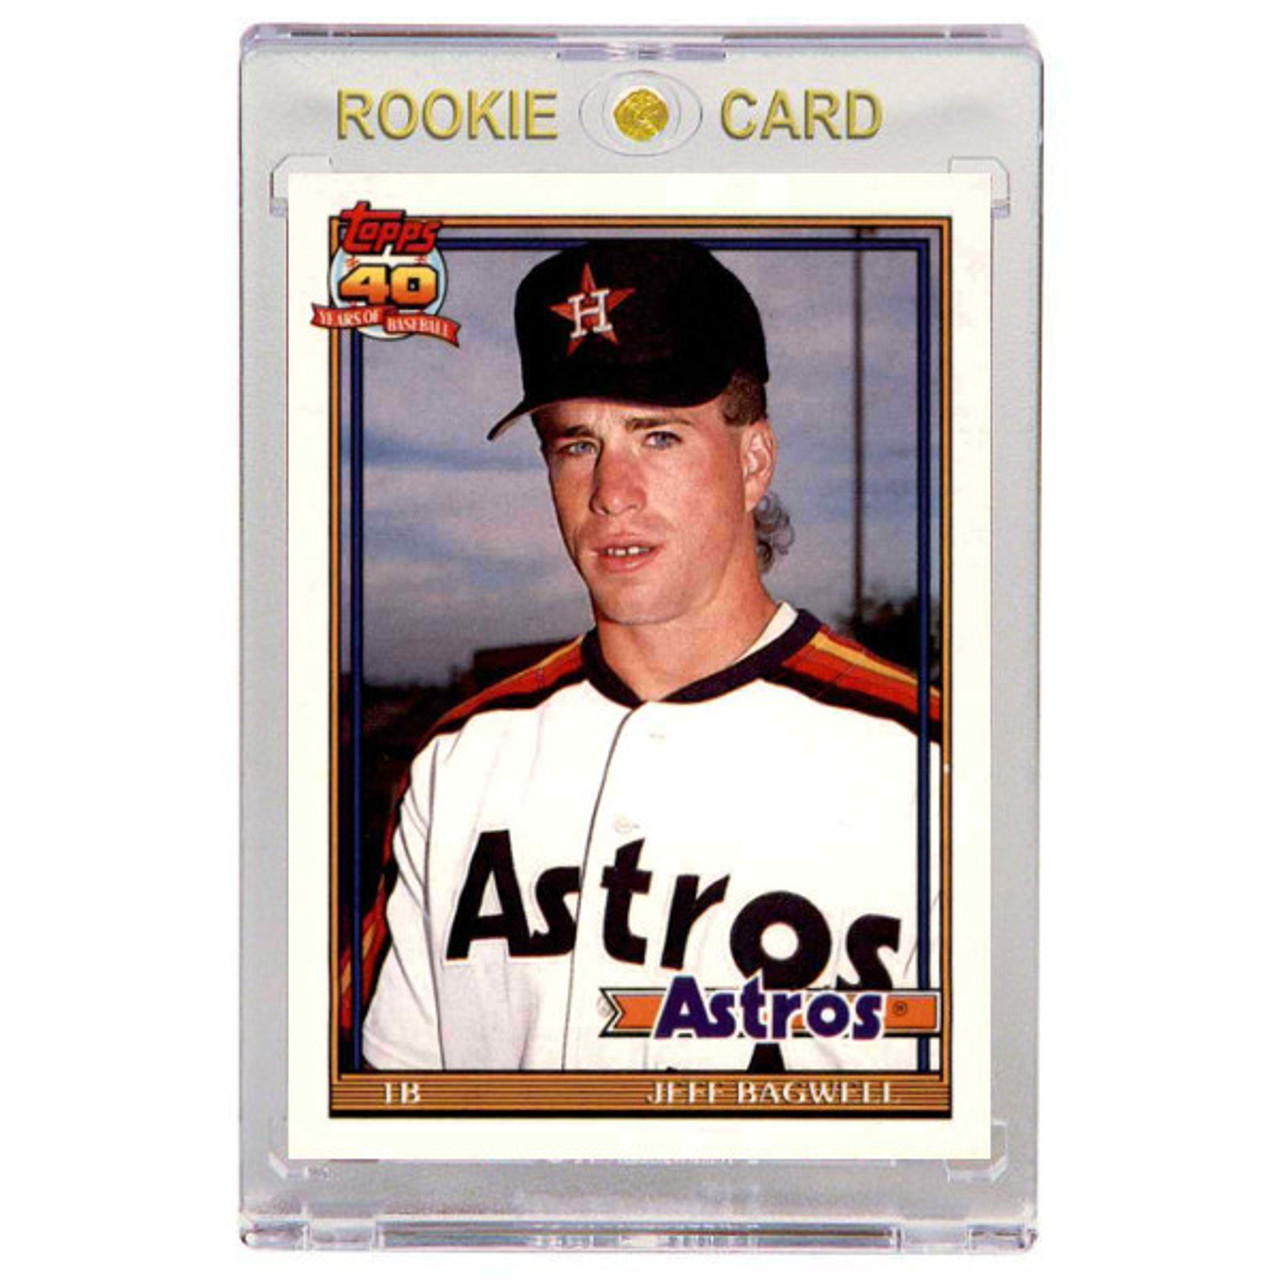 Ron Santo Baseball Cards: Rookie Cards and Baseball Card Timeline